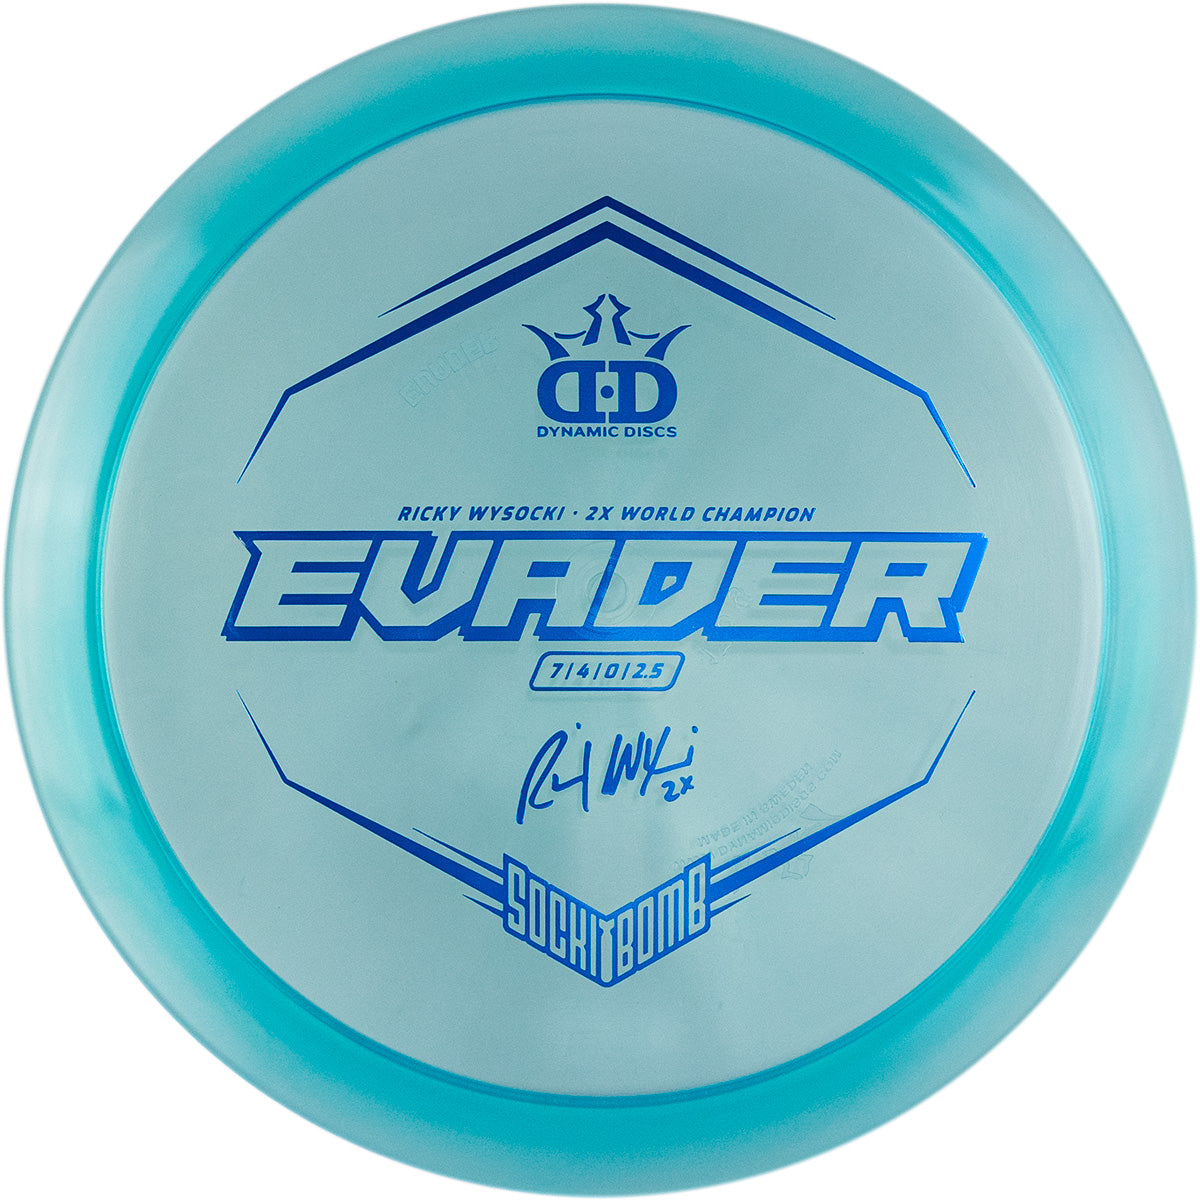 Lucid Ice Evader - Ricky Wysocki SOCKIBOMB Stamp (6757489377345)